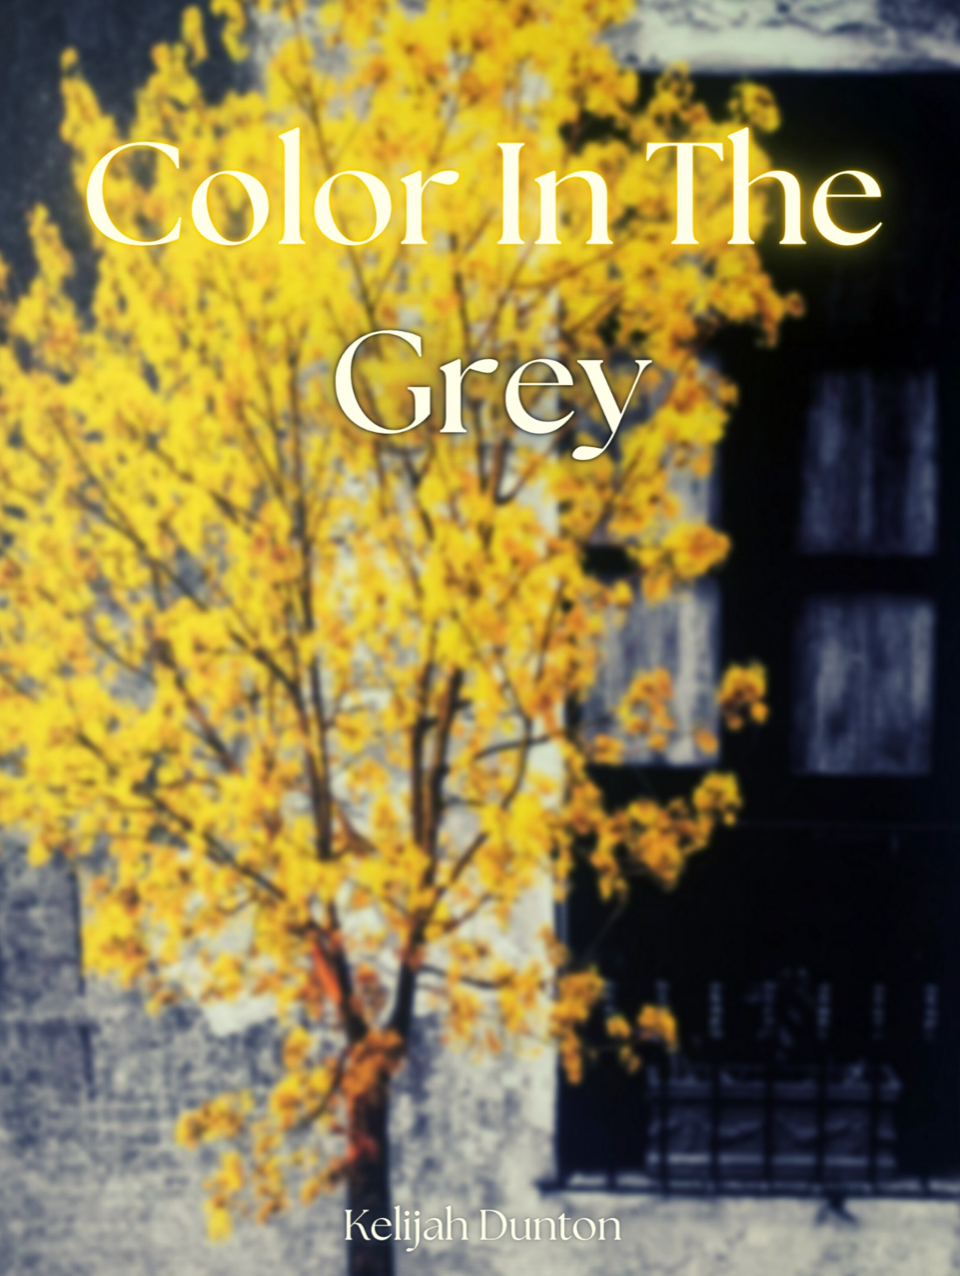 Color In The Grey (Score Only) by Kelijah Dunton